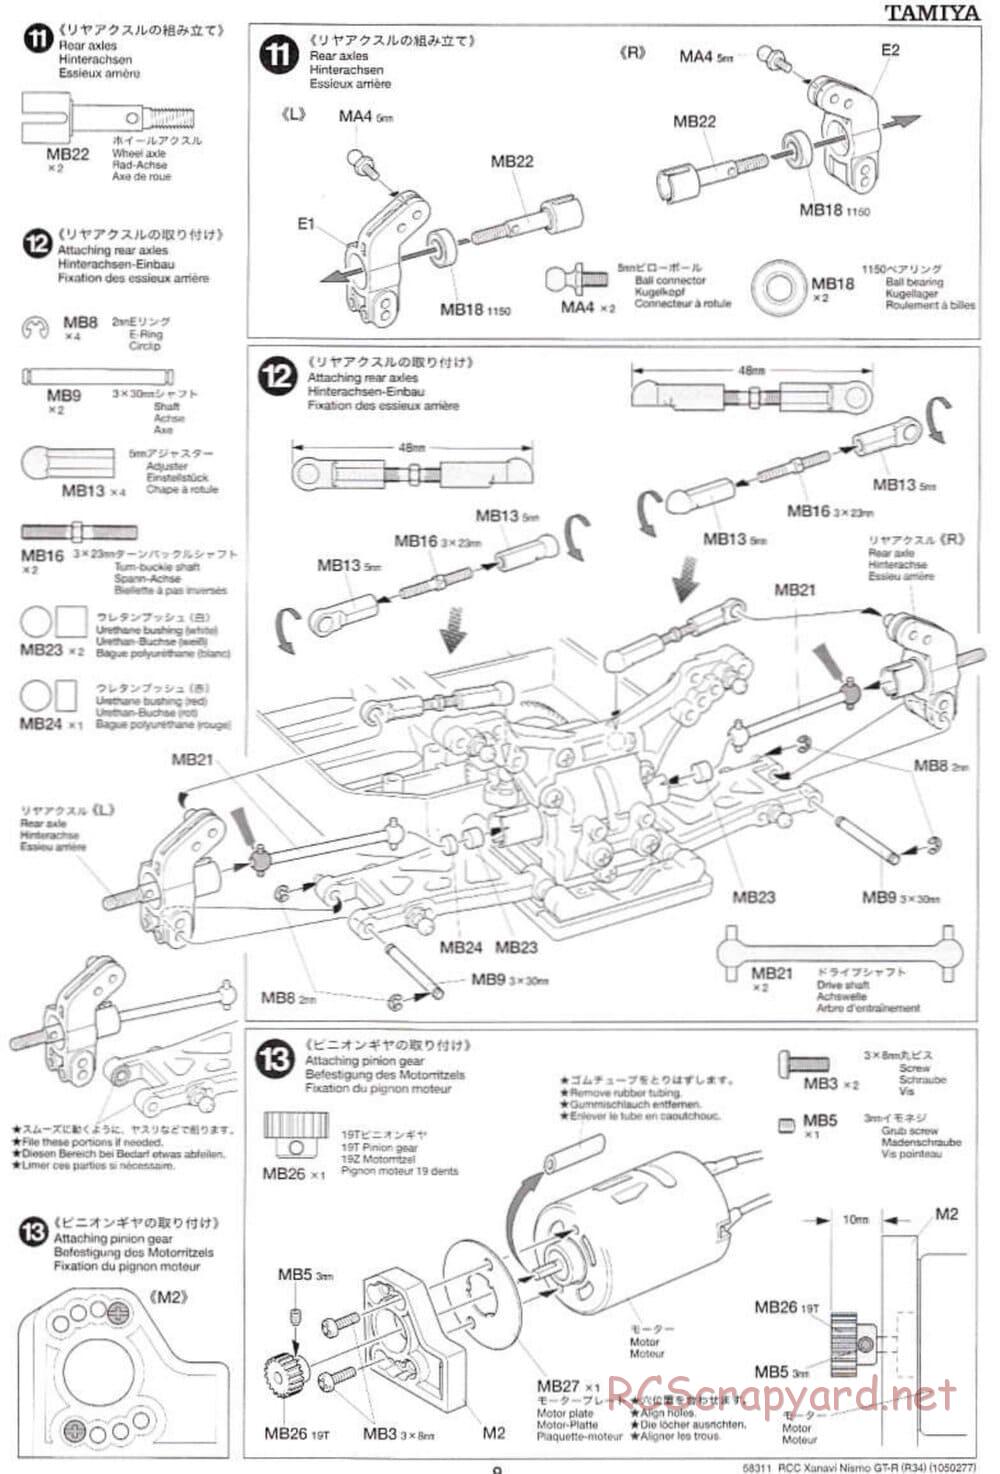 Tamiya - Xanavi Nismo GT-R (R34) - TB-02 Chassis - Manual - Page 9